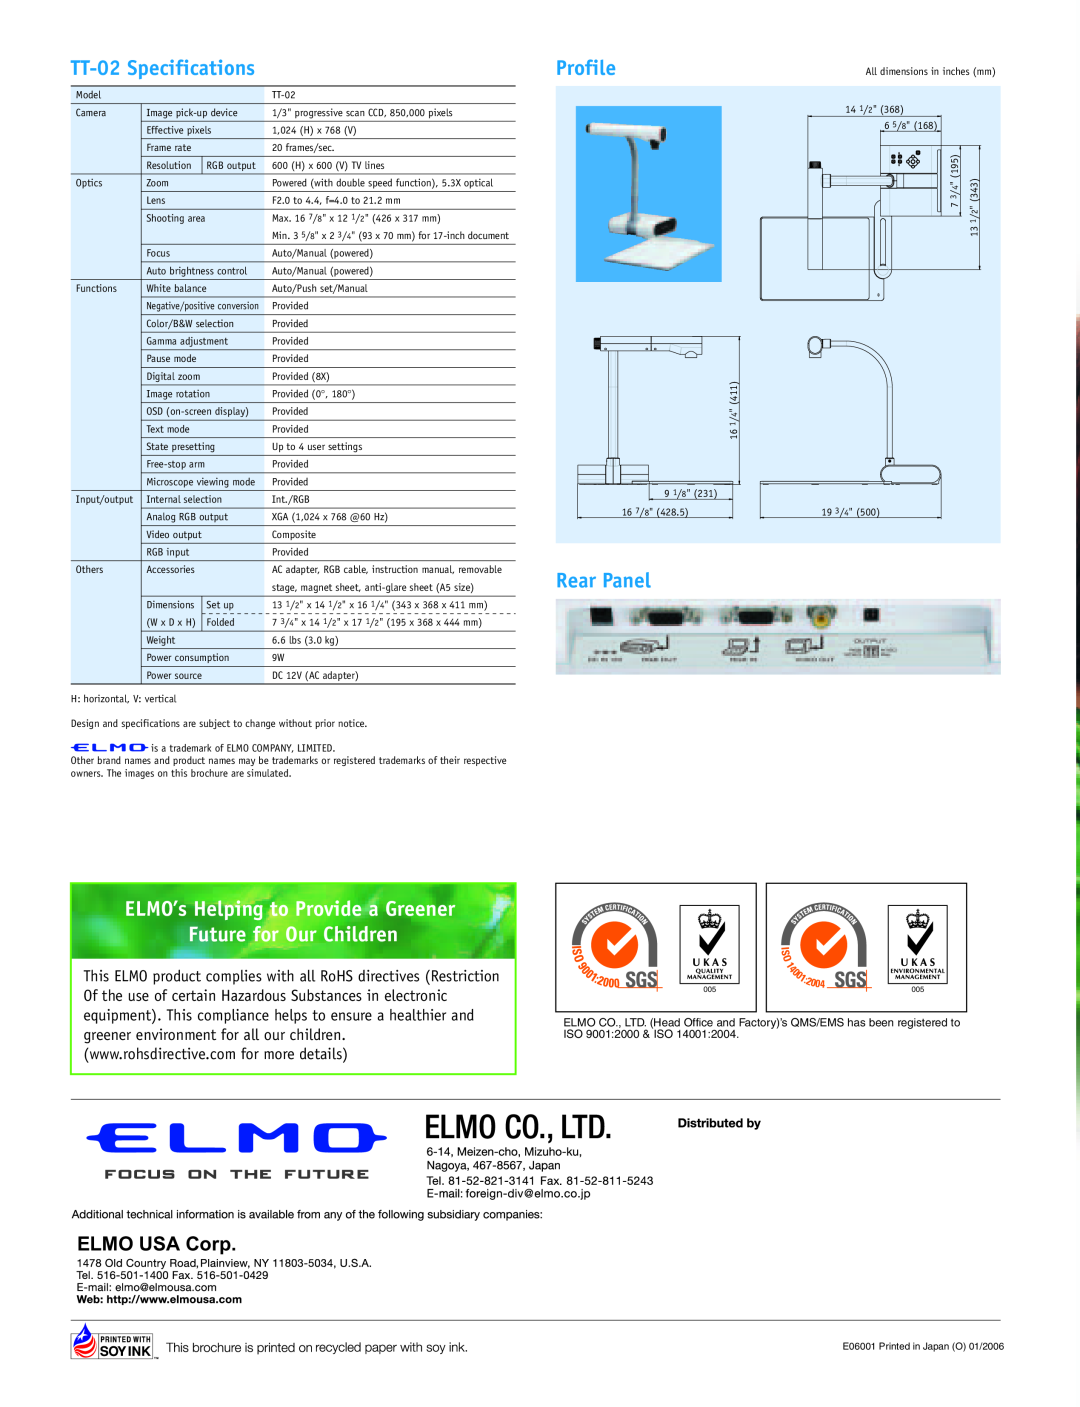 Elmo manual Profile, ELMO USA Corp, TT-02 Specifications, Rear Panel 